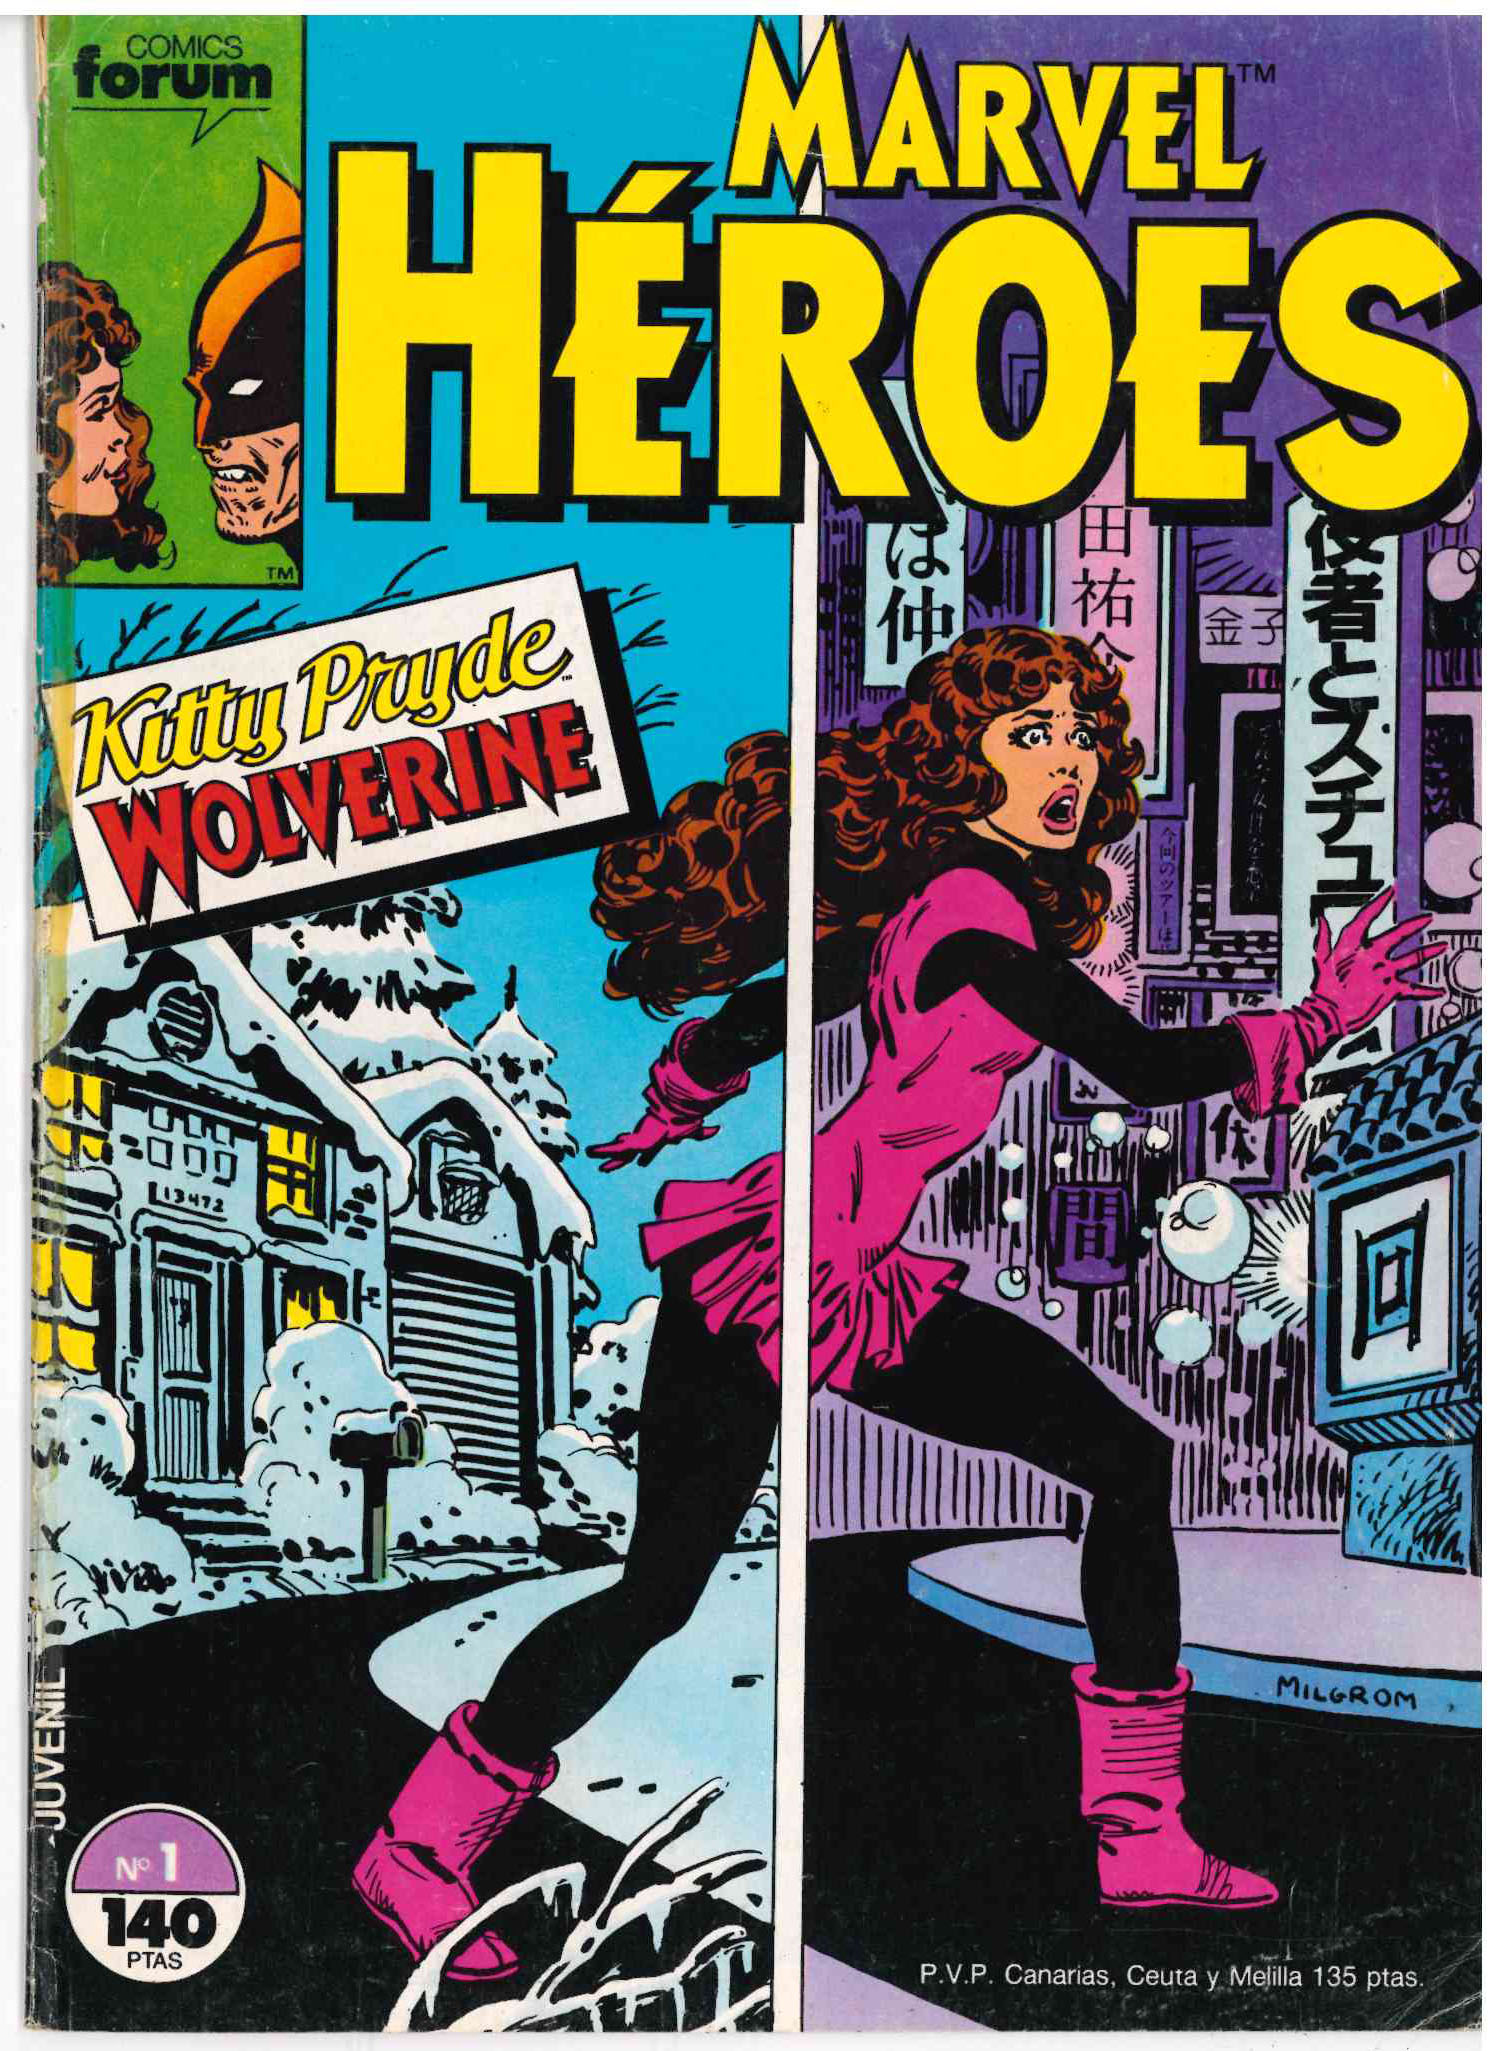 Marvel Héroes. Forum 1987. Nº 1 Kitty Pryde / Wolverine